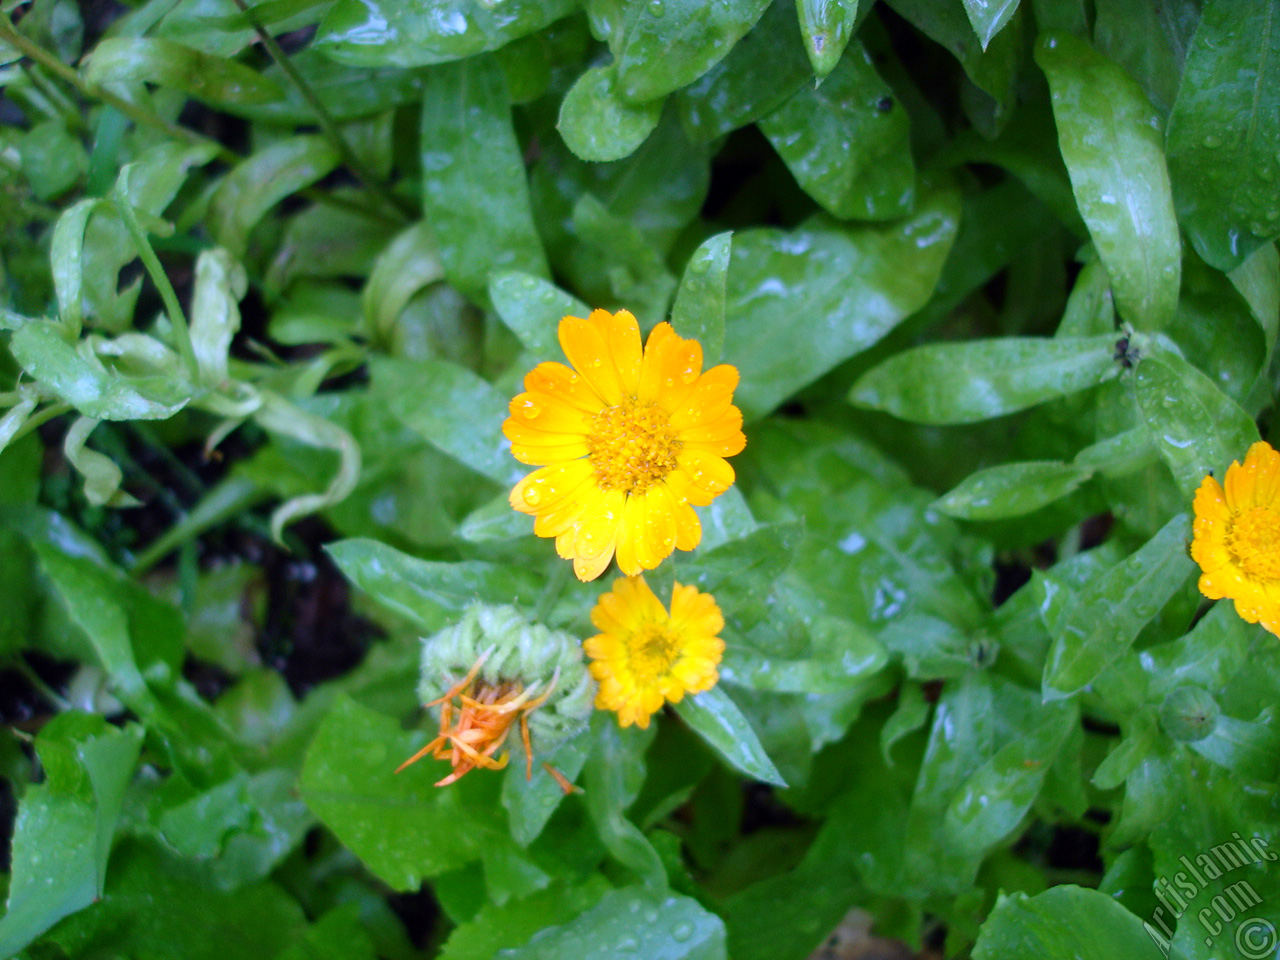 Dark orange color Pot Marigold -Scotch Marigold- flower which is similar to yellow daisy.
